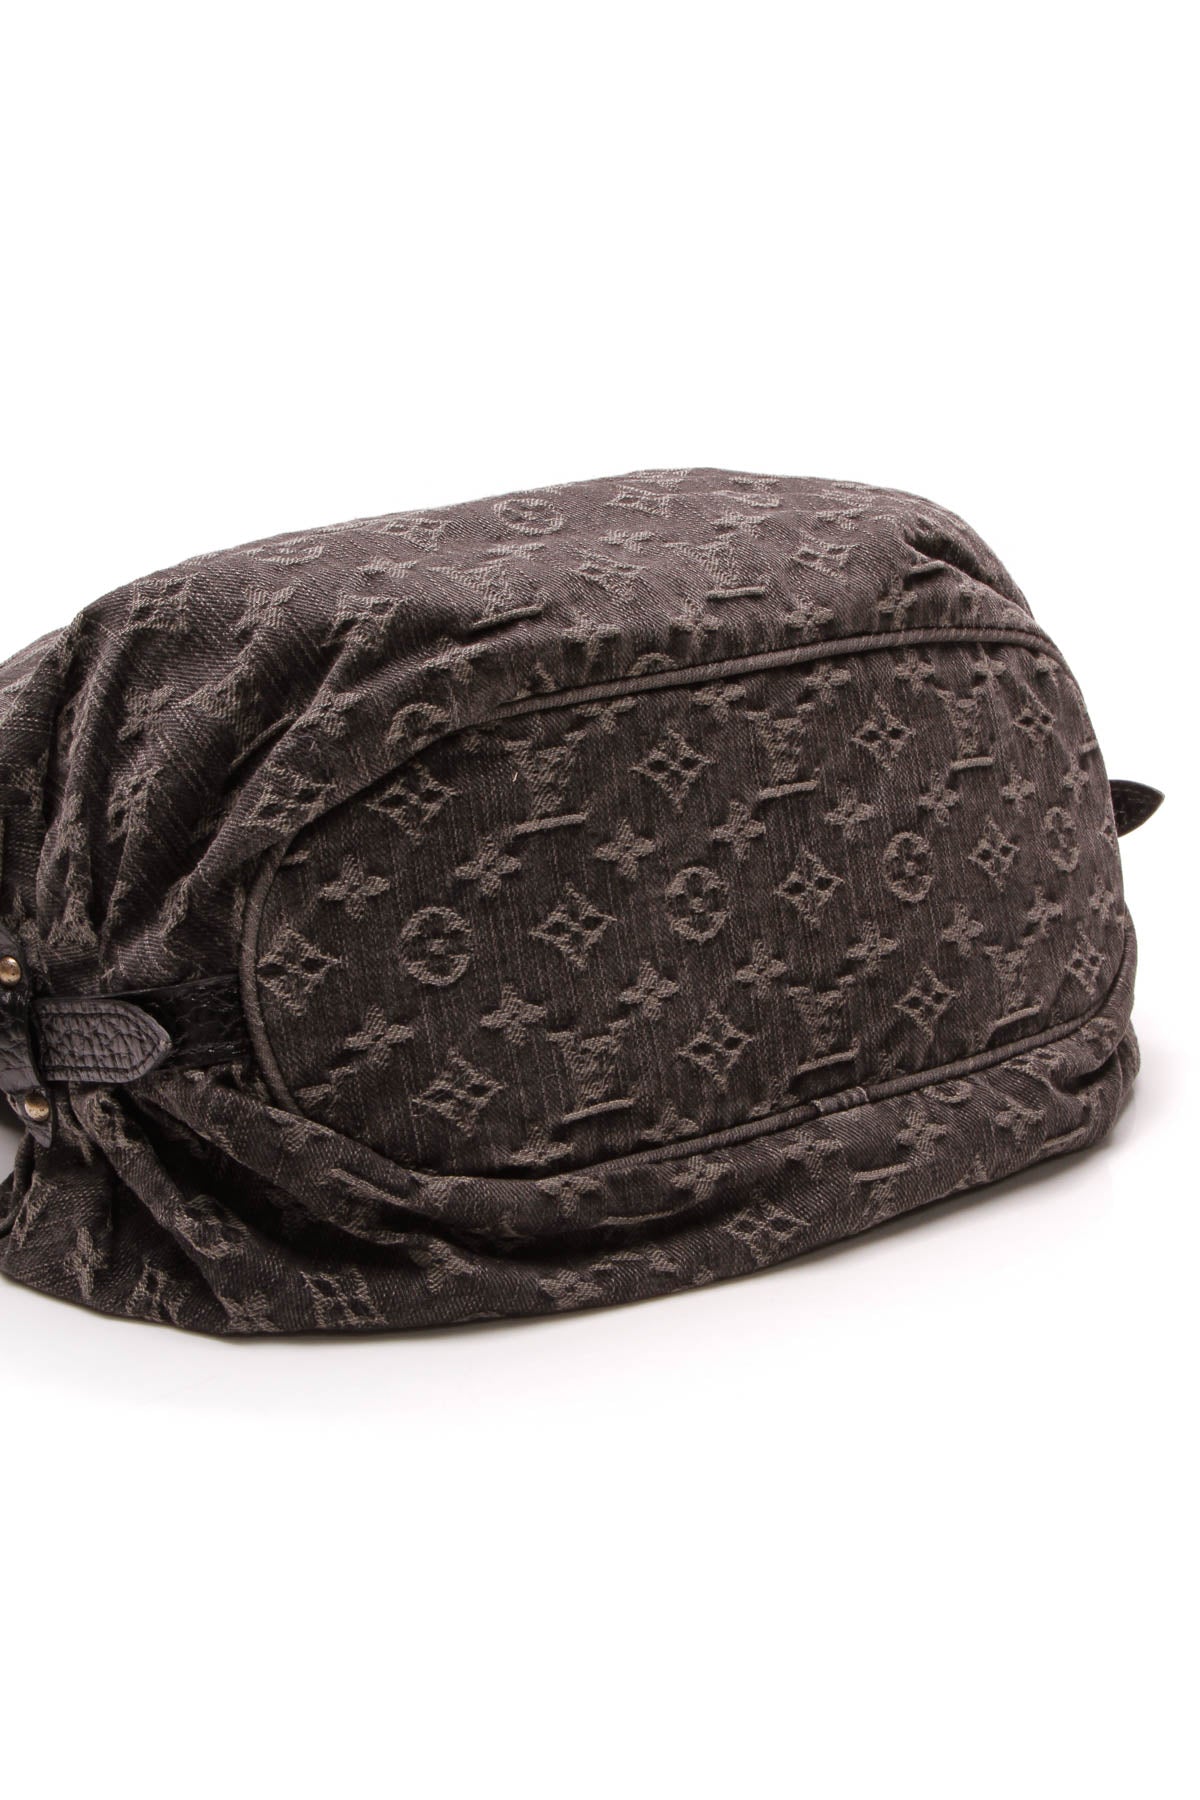 Louis Vuitton XS Bag - Black Monogram Denim | eBay